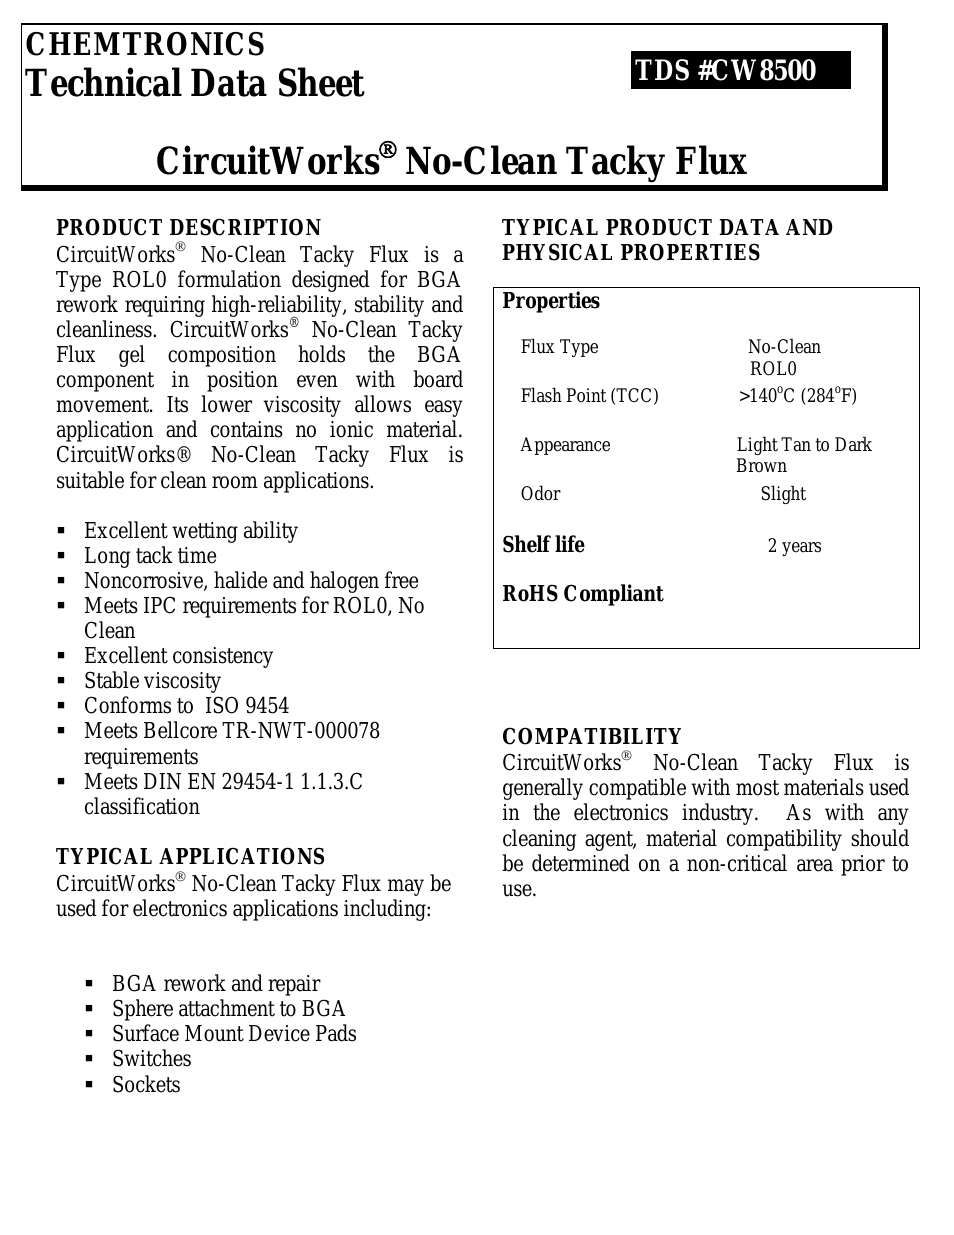 CircuitWorks® No-Clean Tacky Flux CW8510